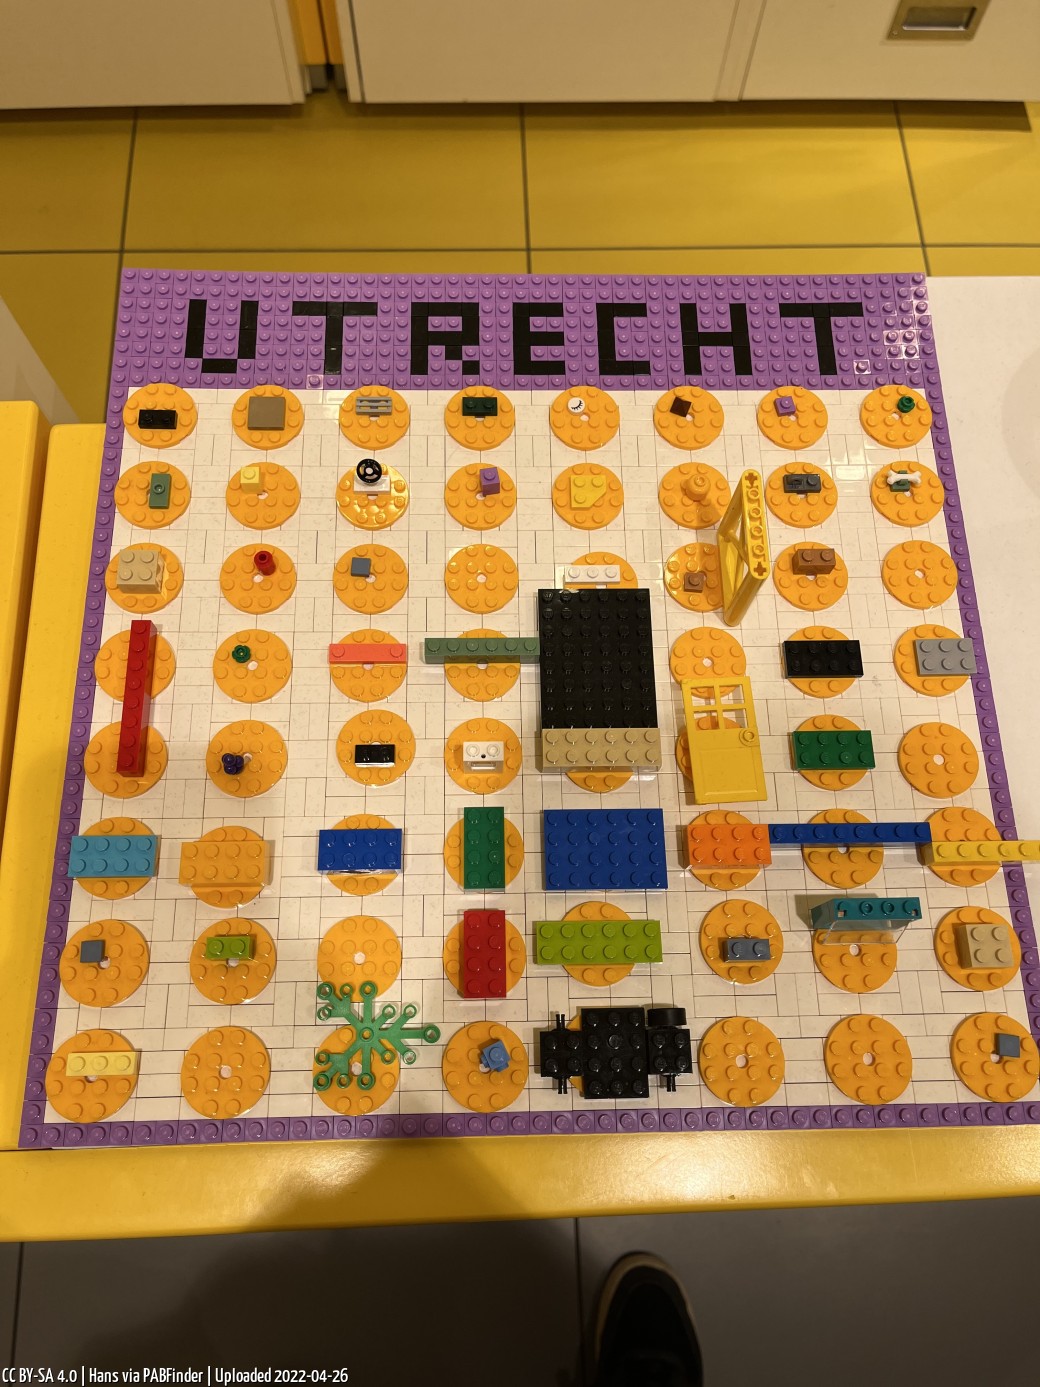 Pick a Brick Utrecht (Hans, 4/26/22, 7:29:54 PM)